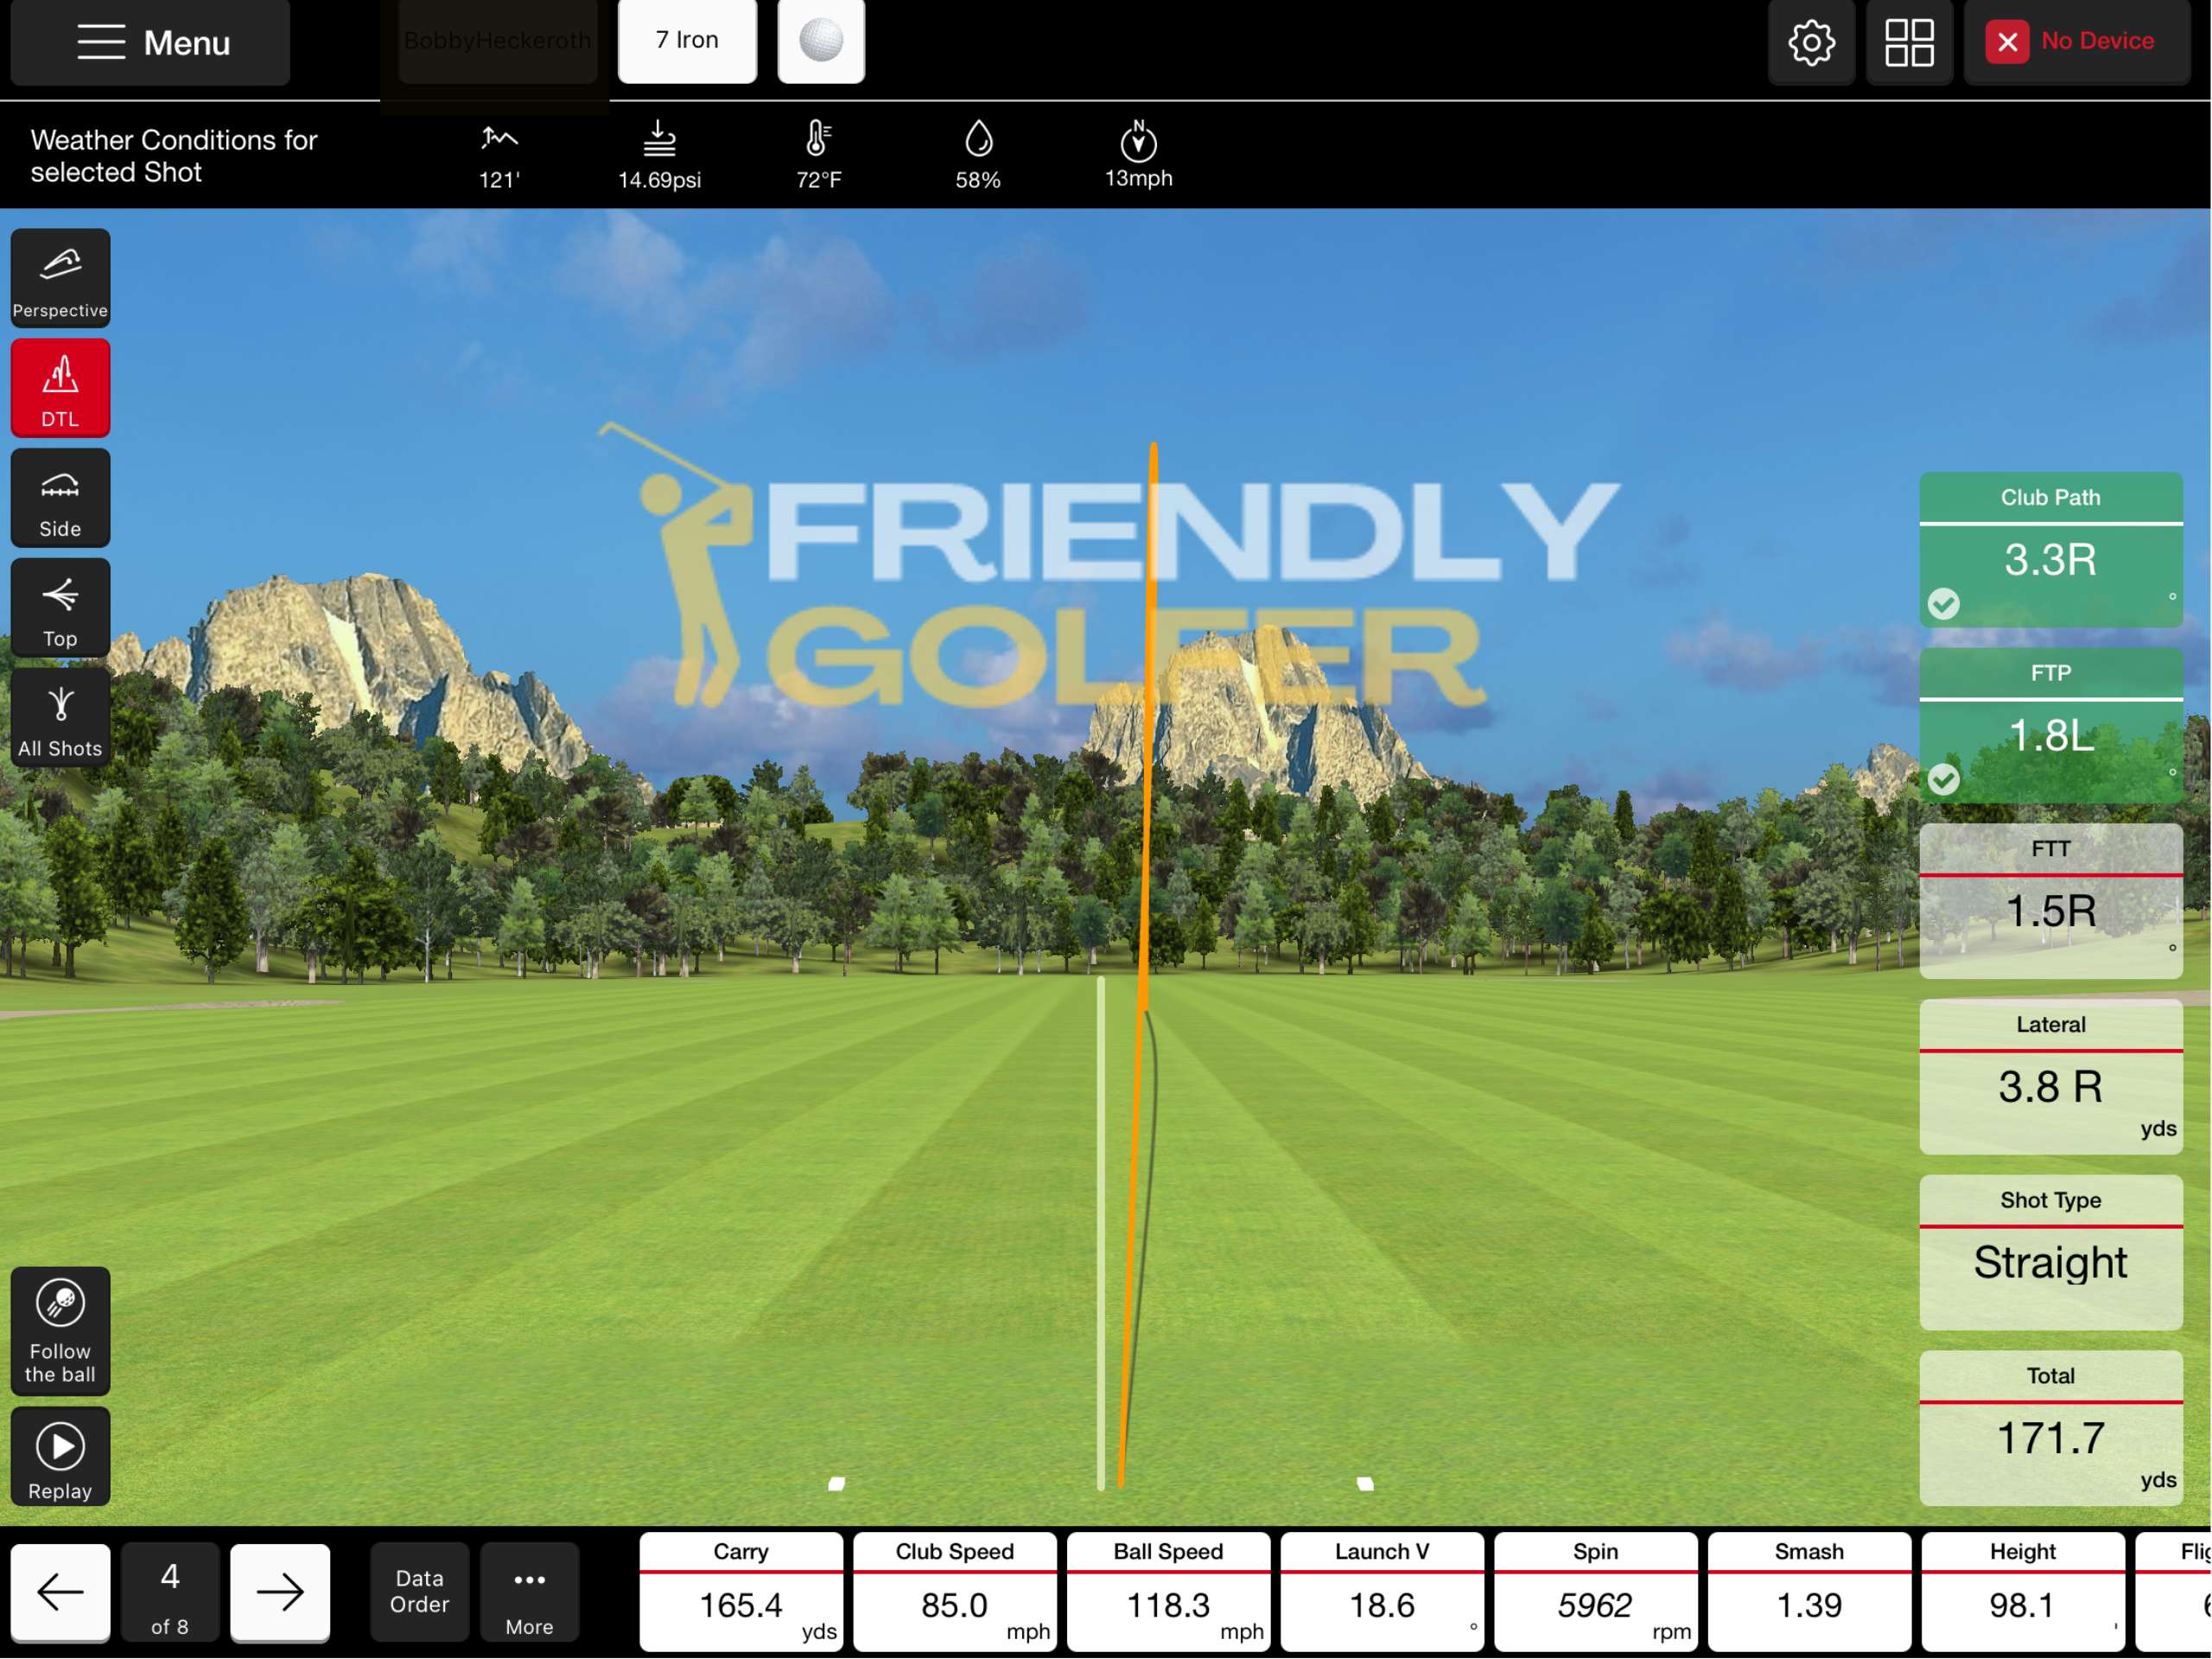 FS Golf app